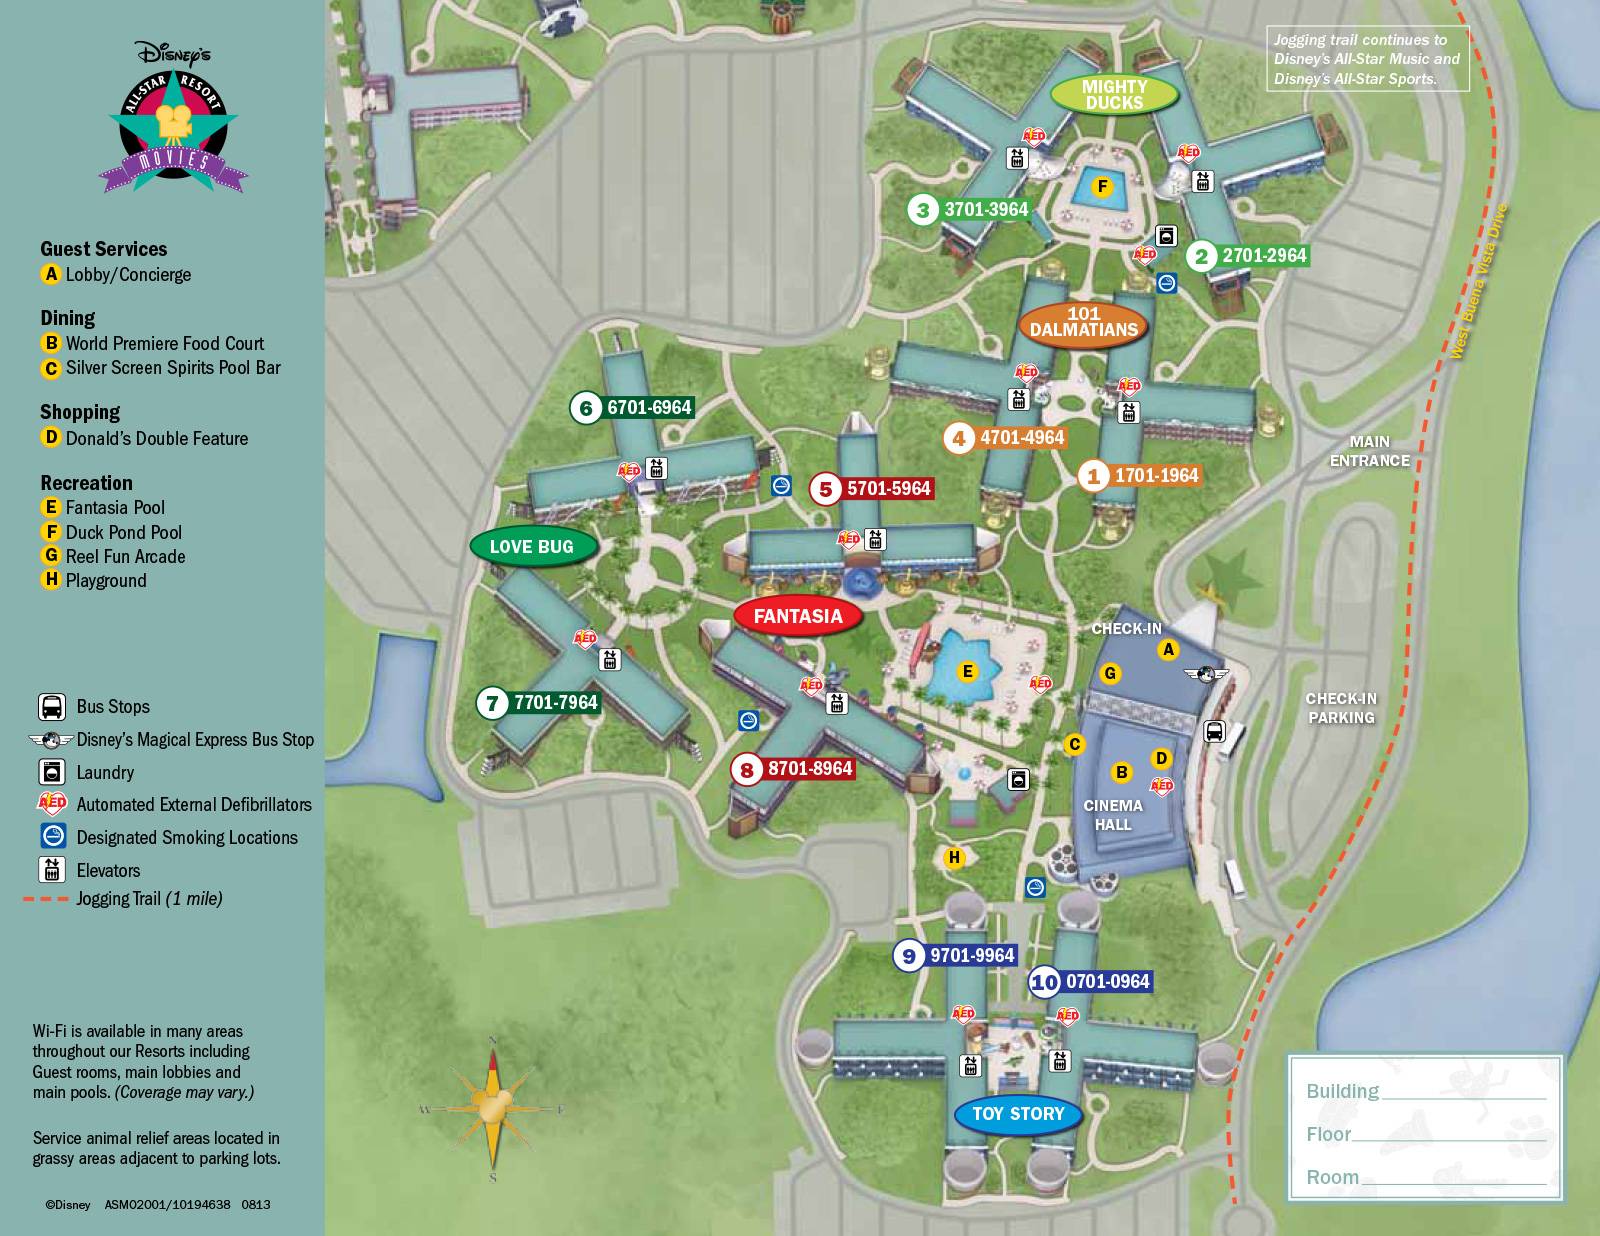 PHOTOS - New design of maps now at Walt Disney World resort hotels